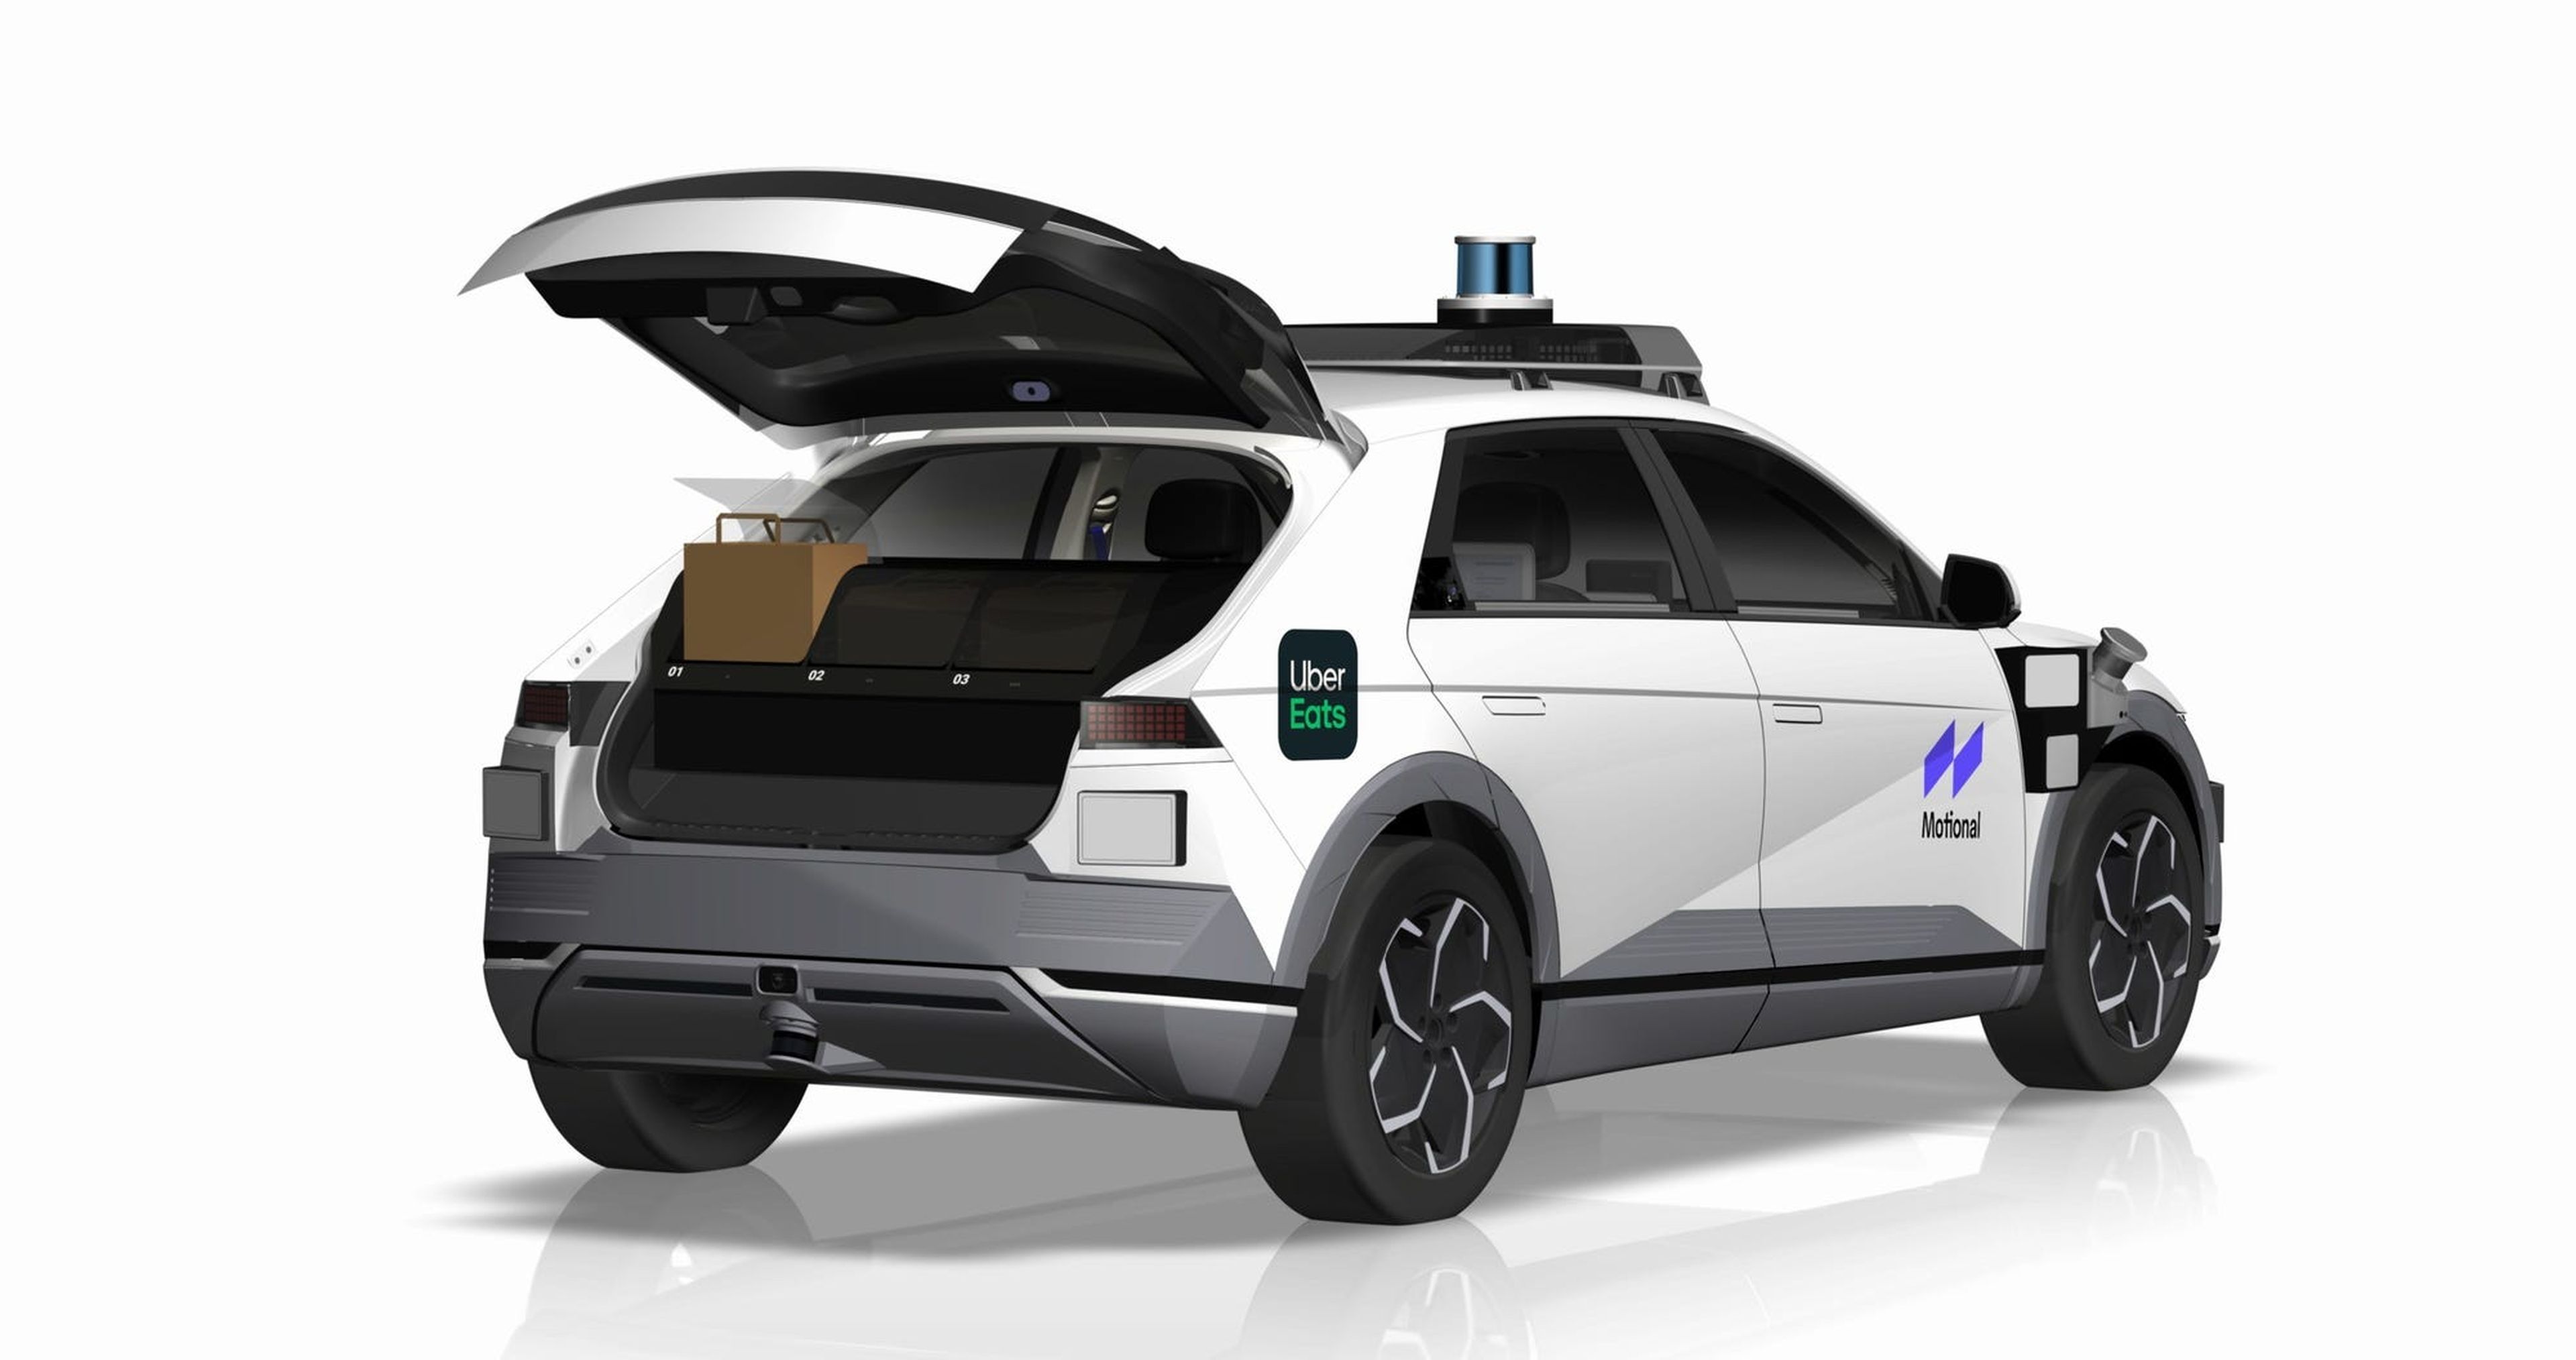 El robotaxi totalmente eléctrico Hyundai IONIQ 5 de Motional realizará entregas autónomas para Uber a partir de 2022.